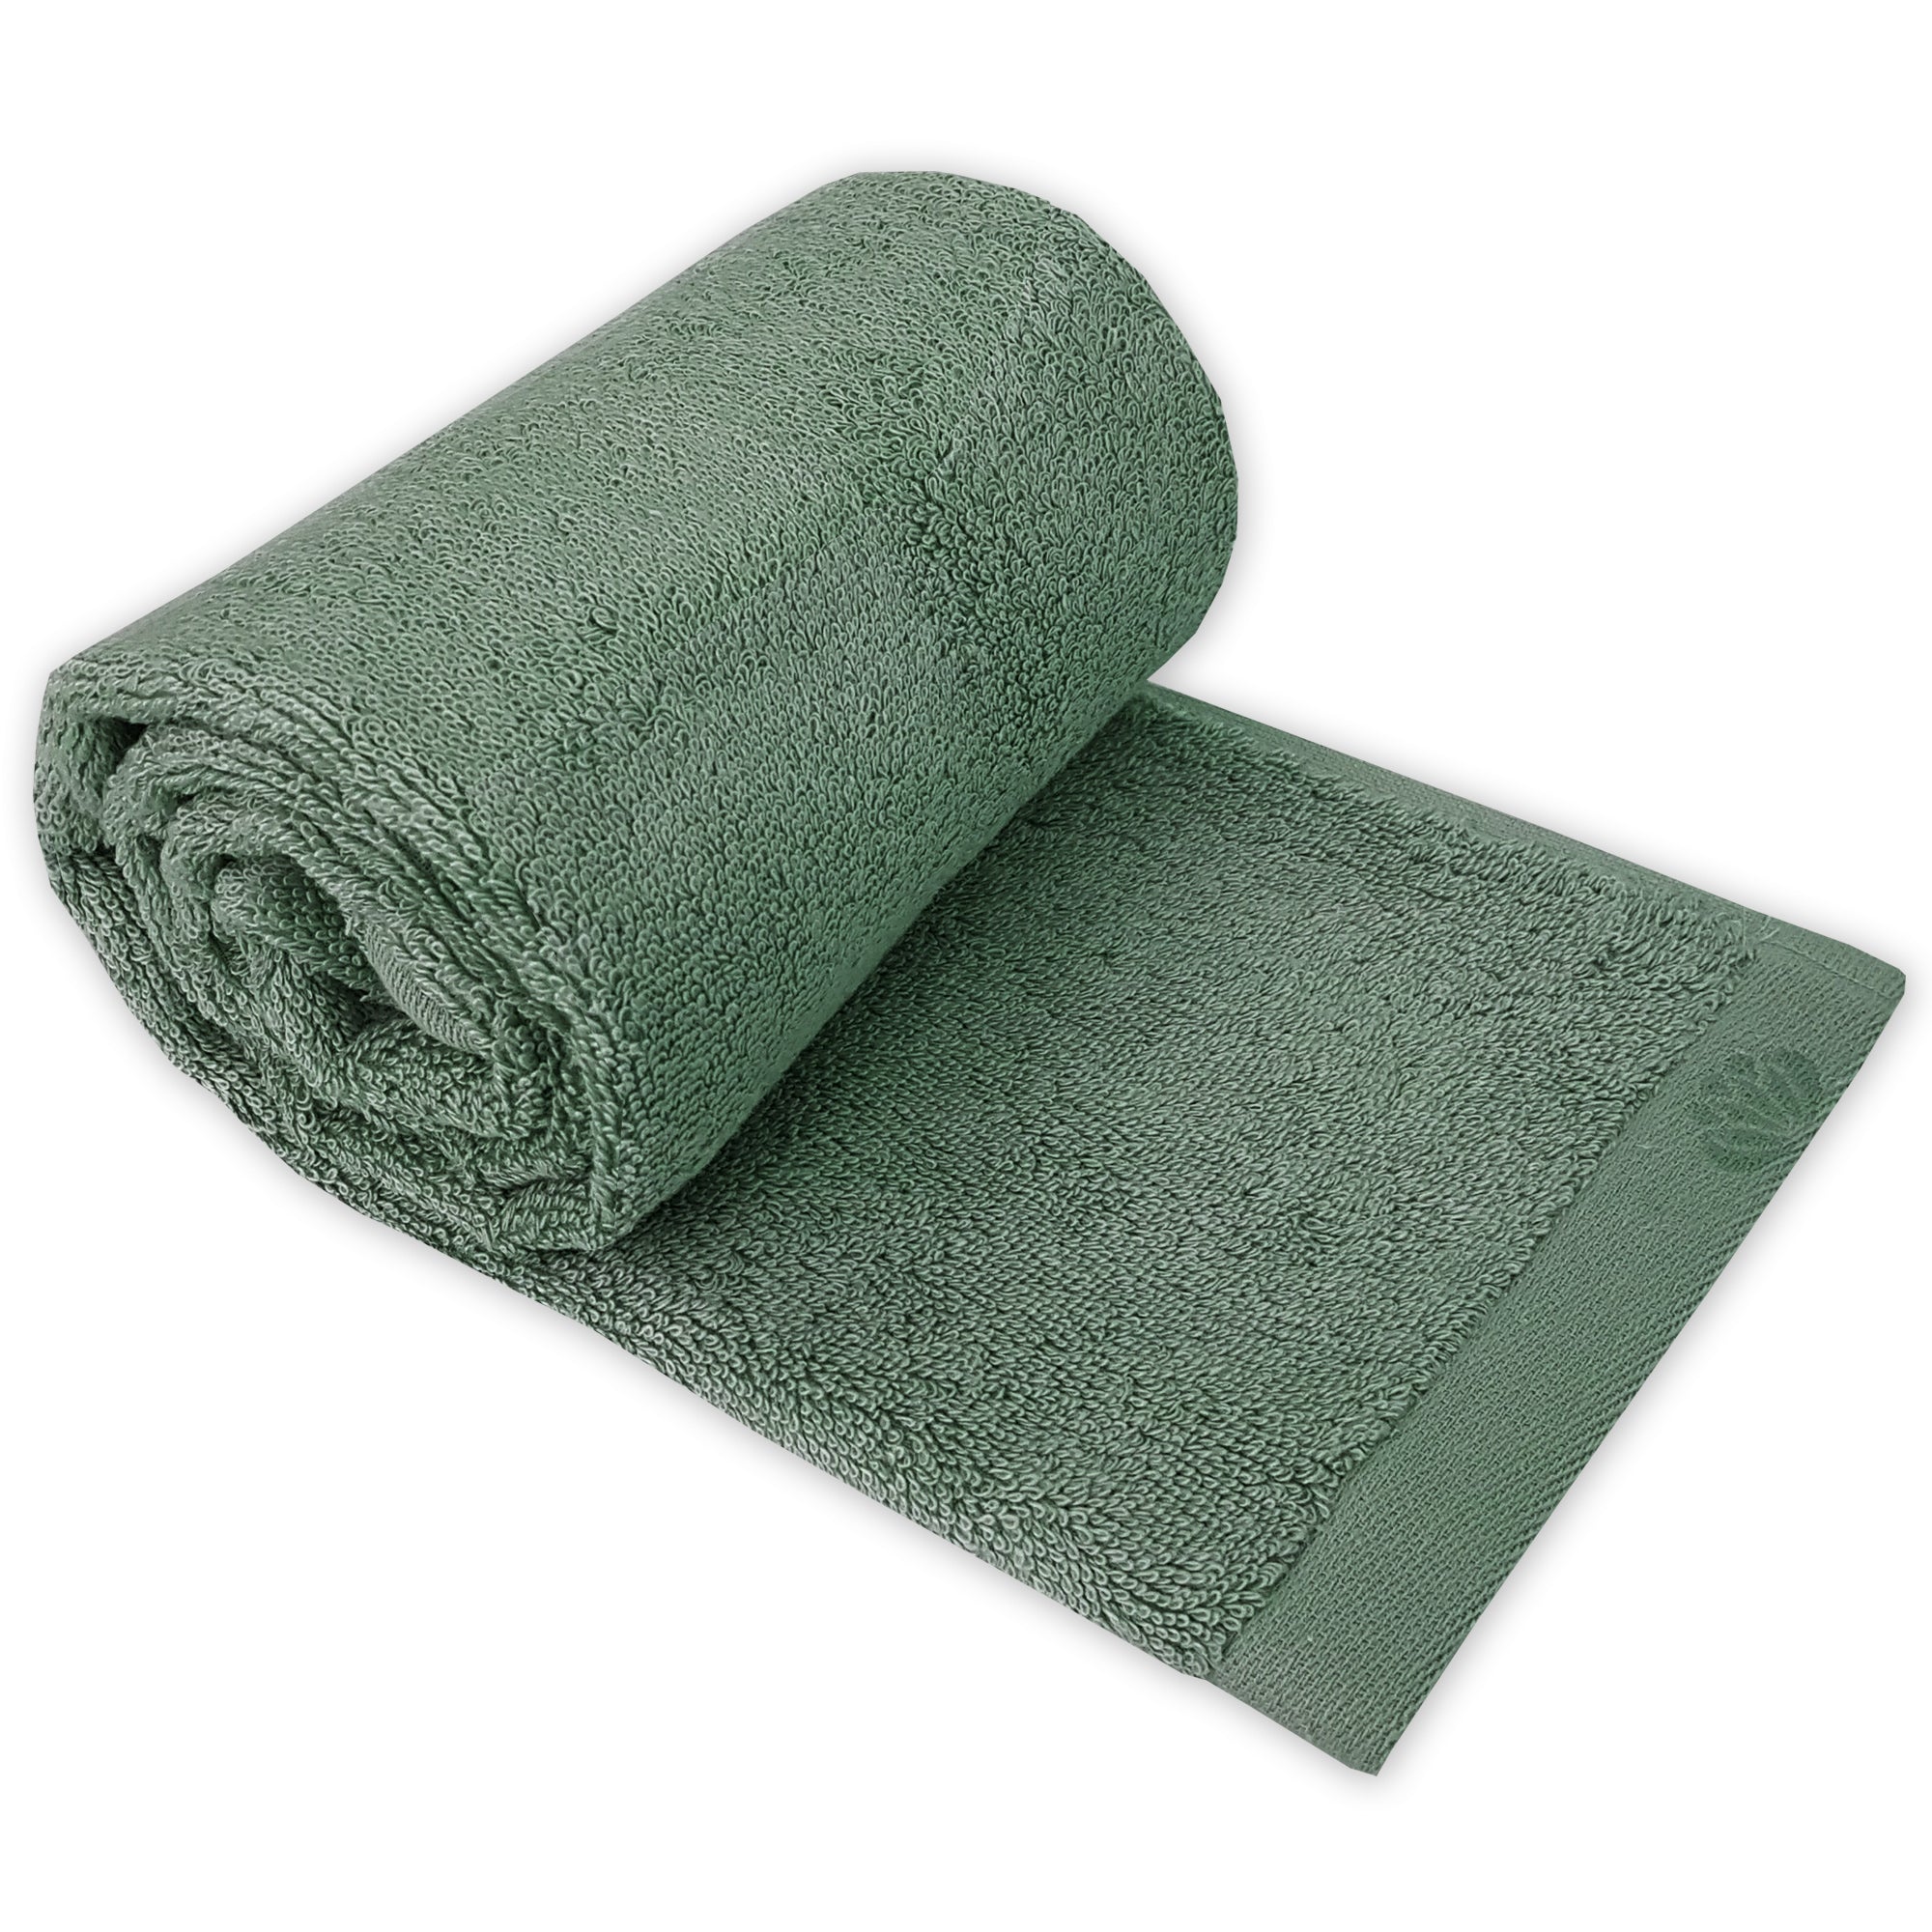 Shower towel "Botanic Deluxe" CO2 neutral beech wood fiber